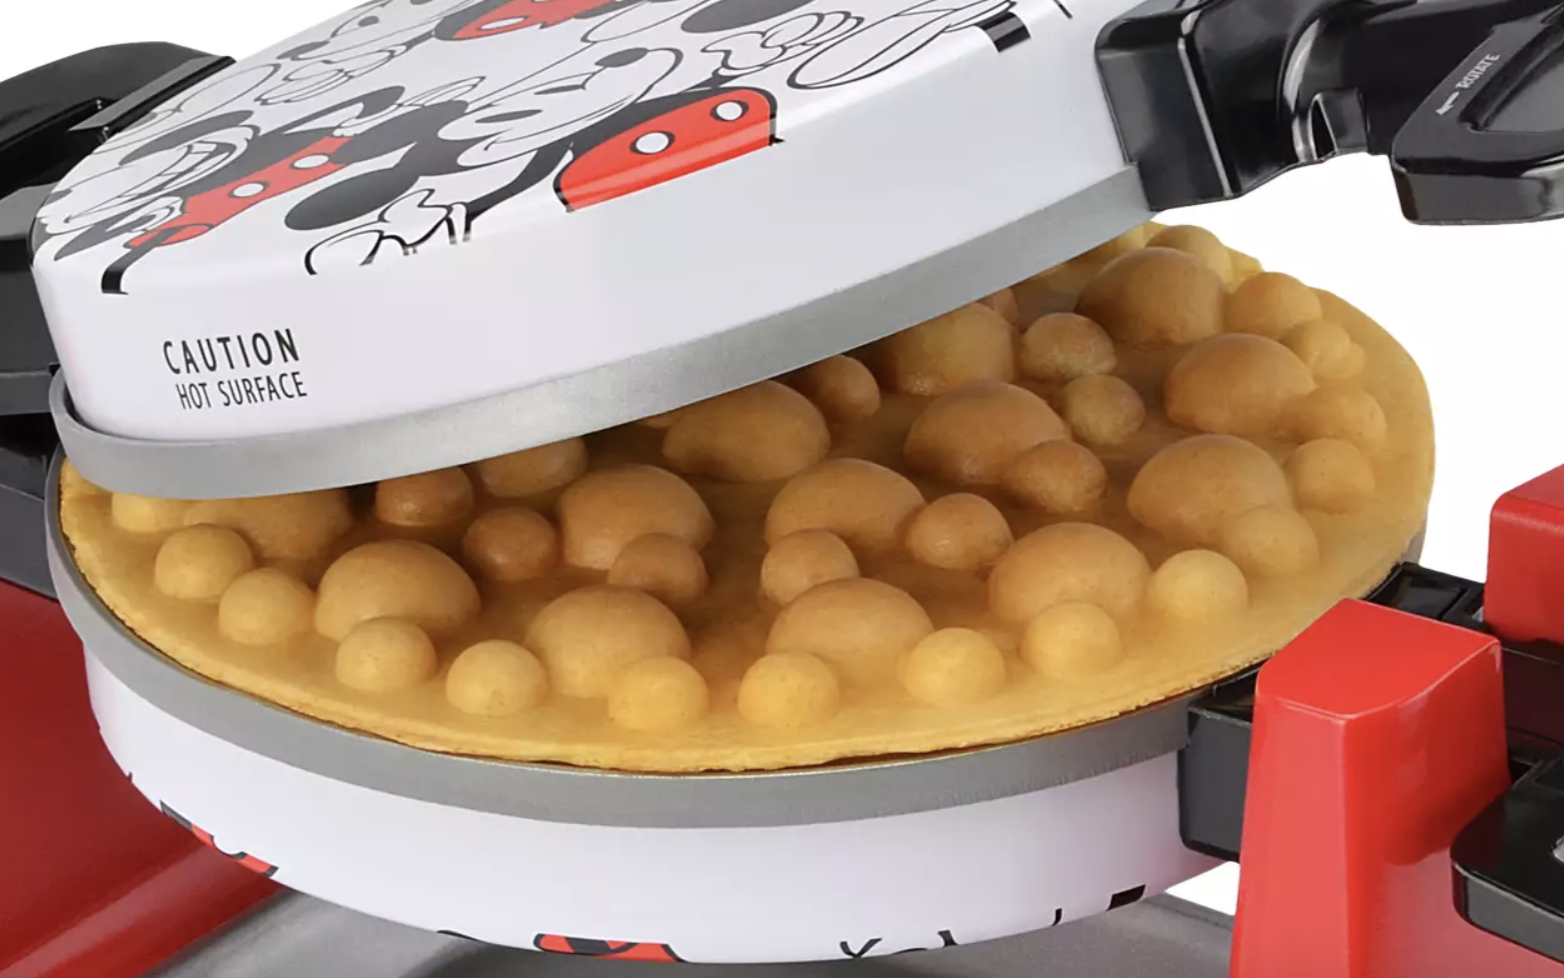 New Mickey Waffle Maker! It makes waffles just like the Disney